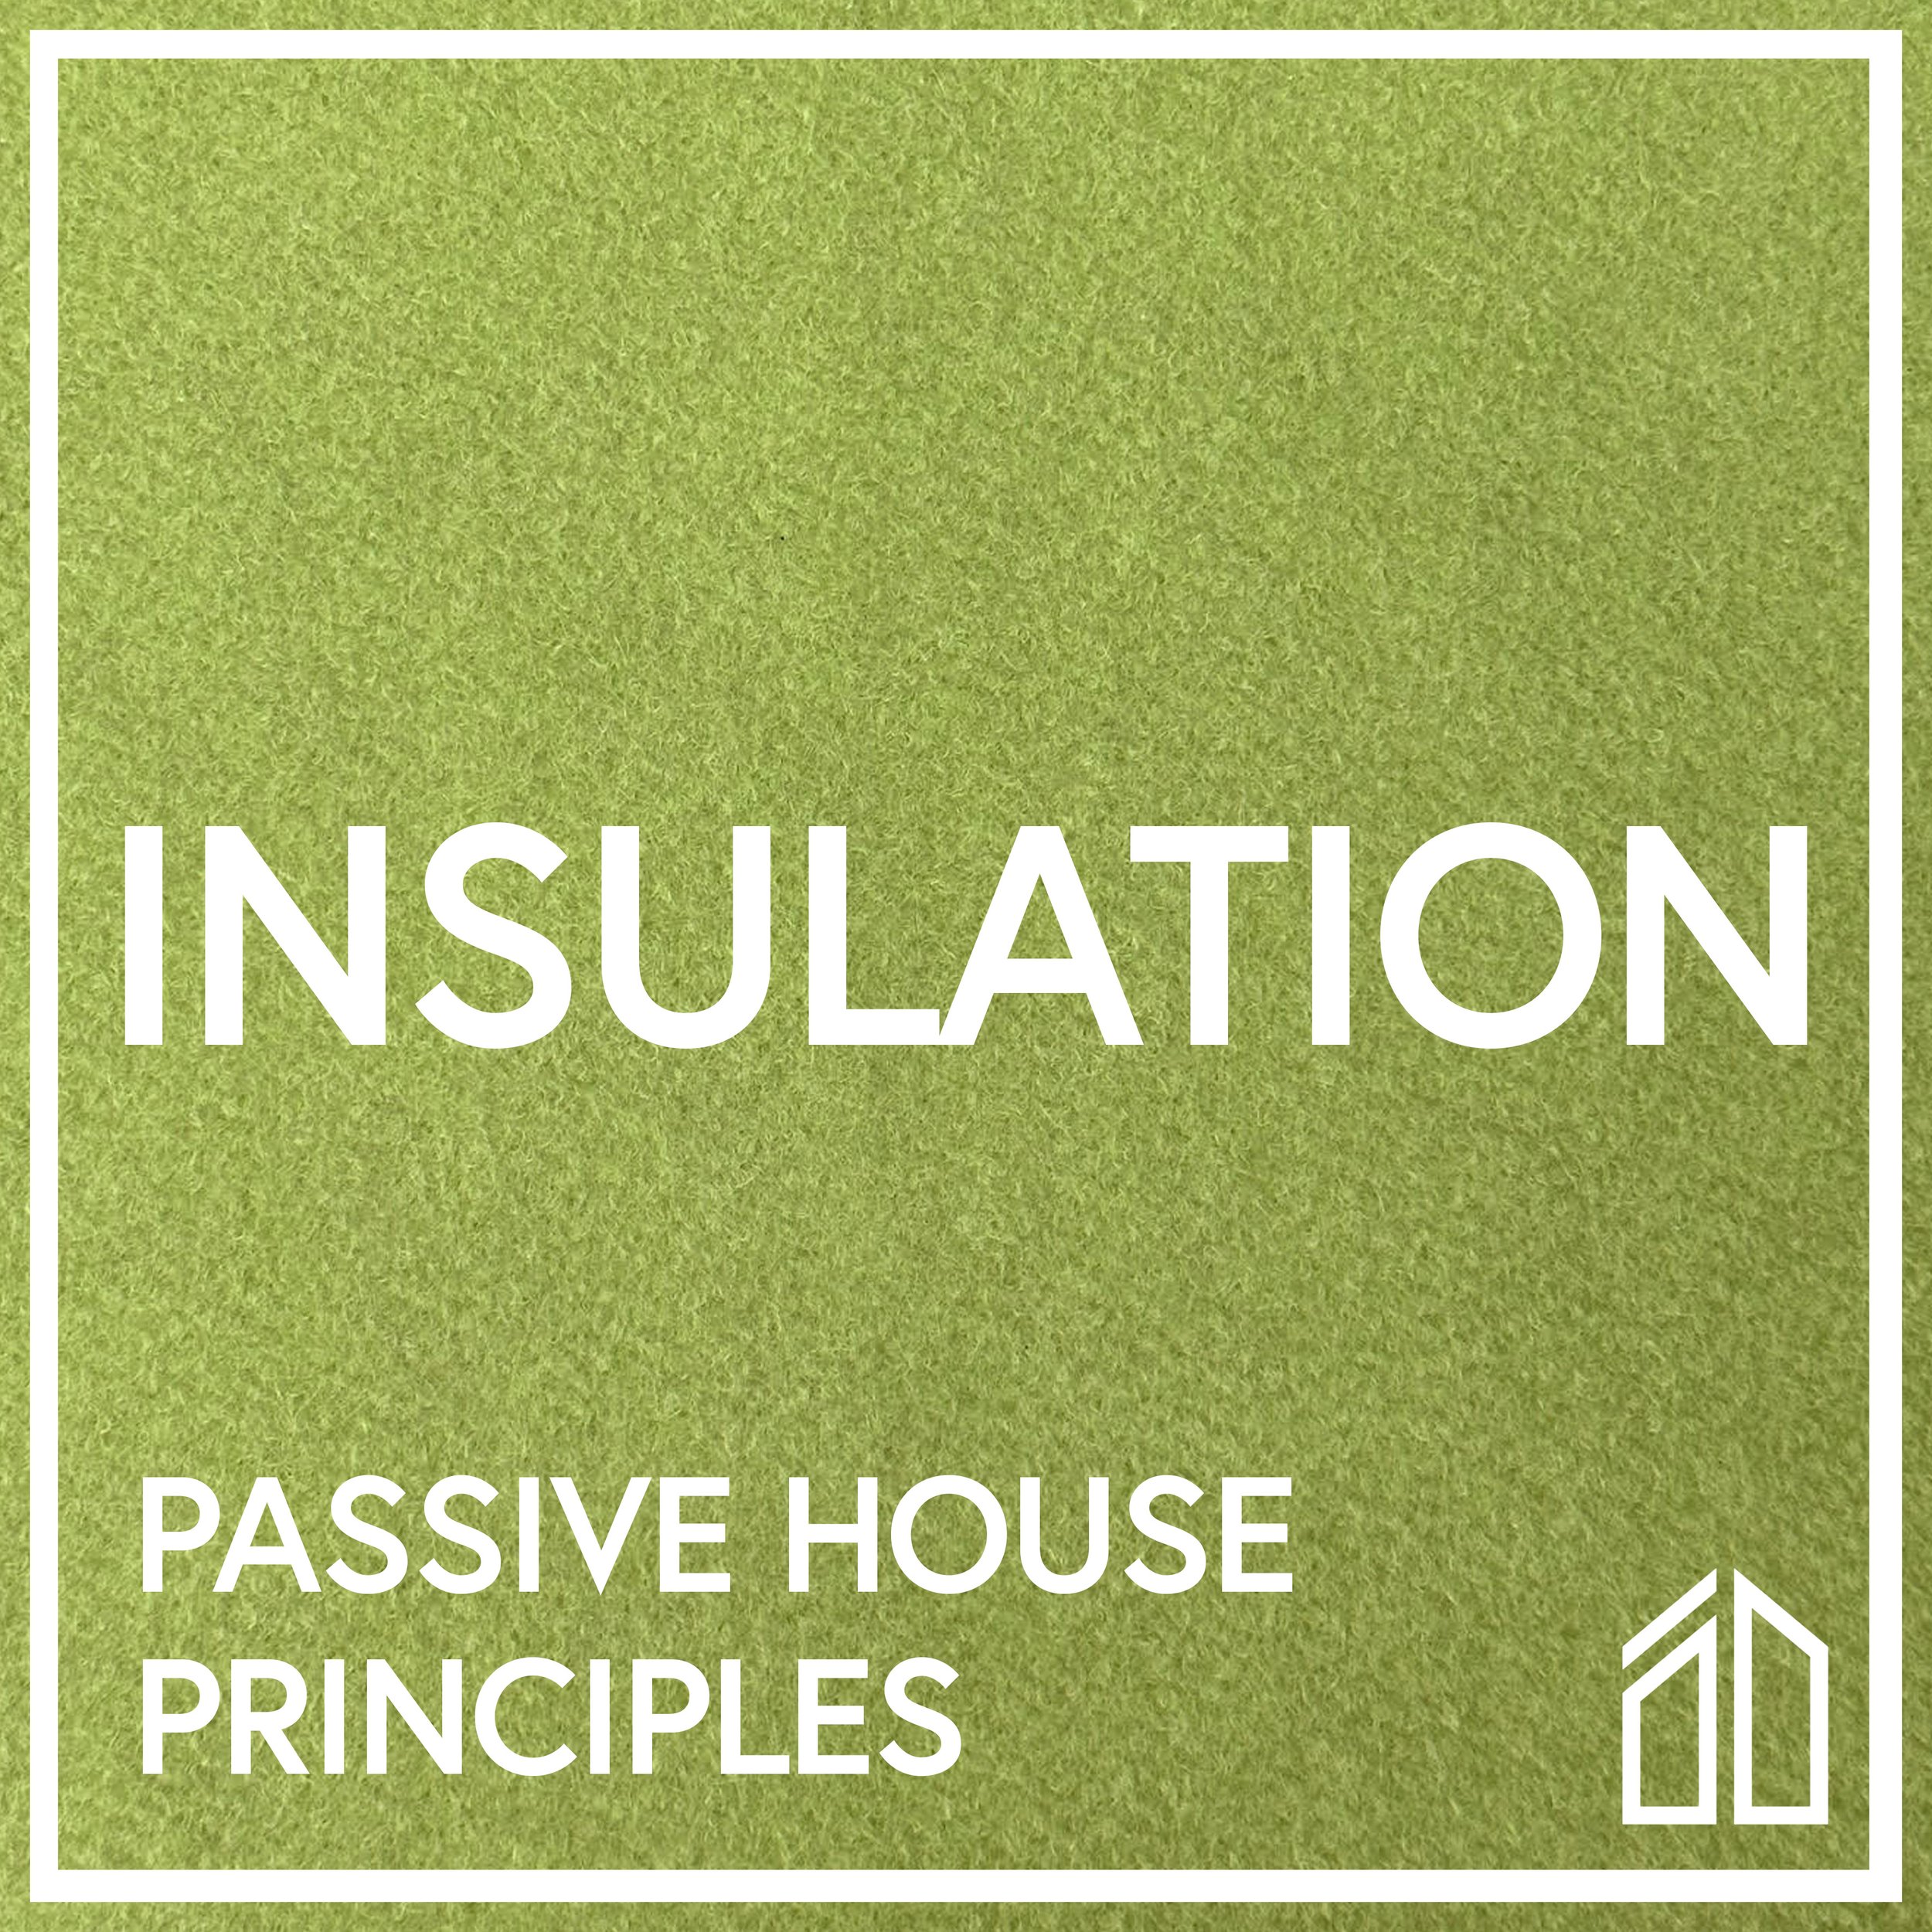 Passive house principles - Insulation